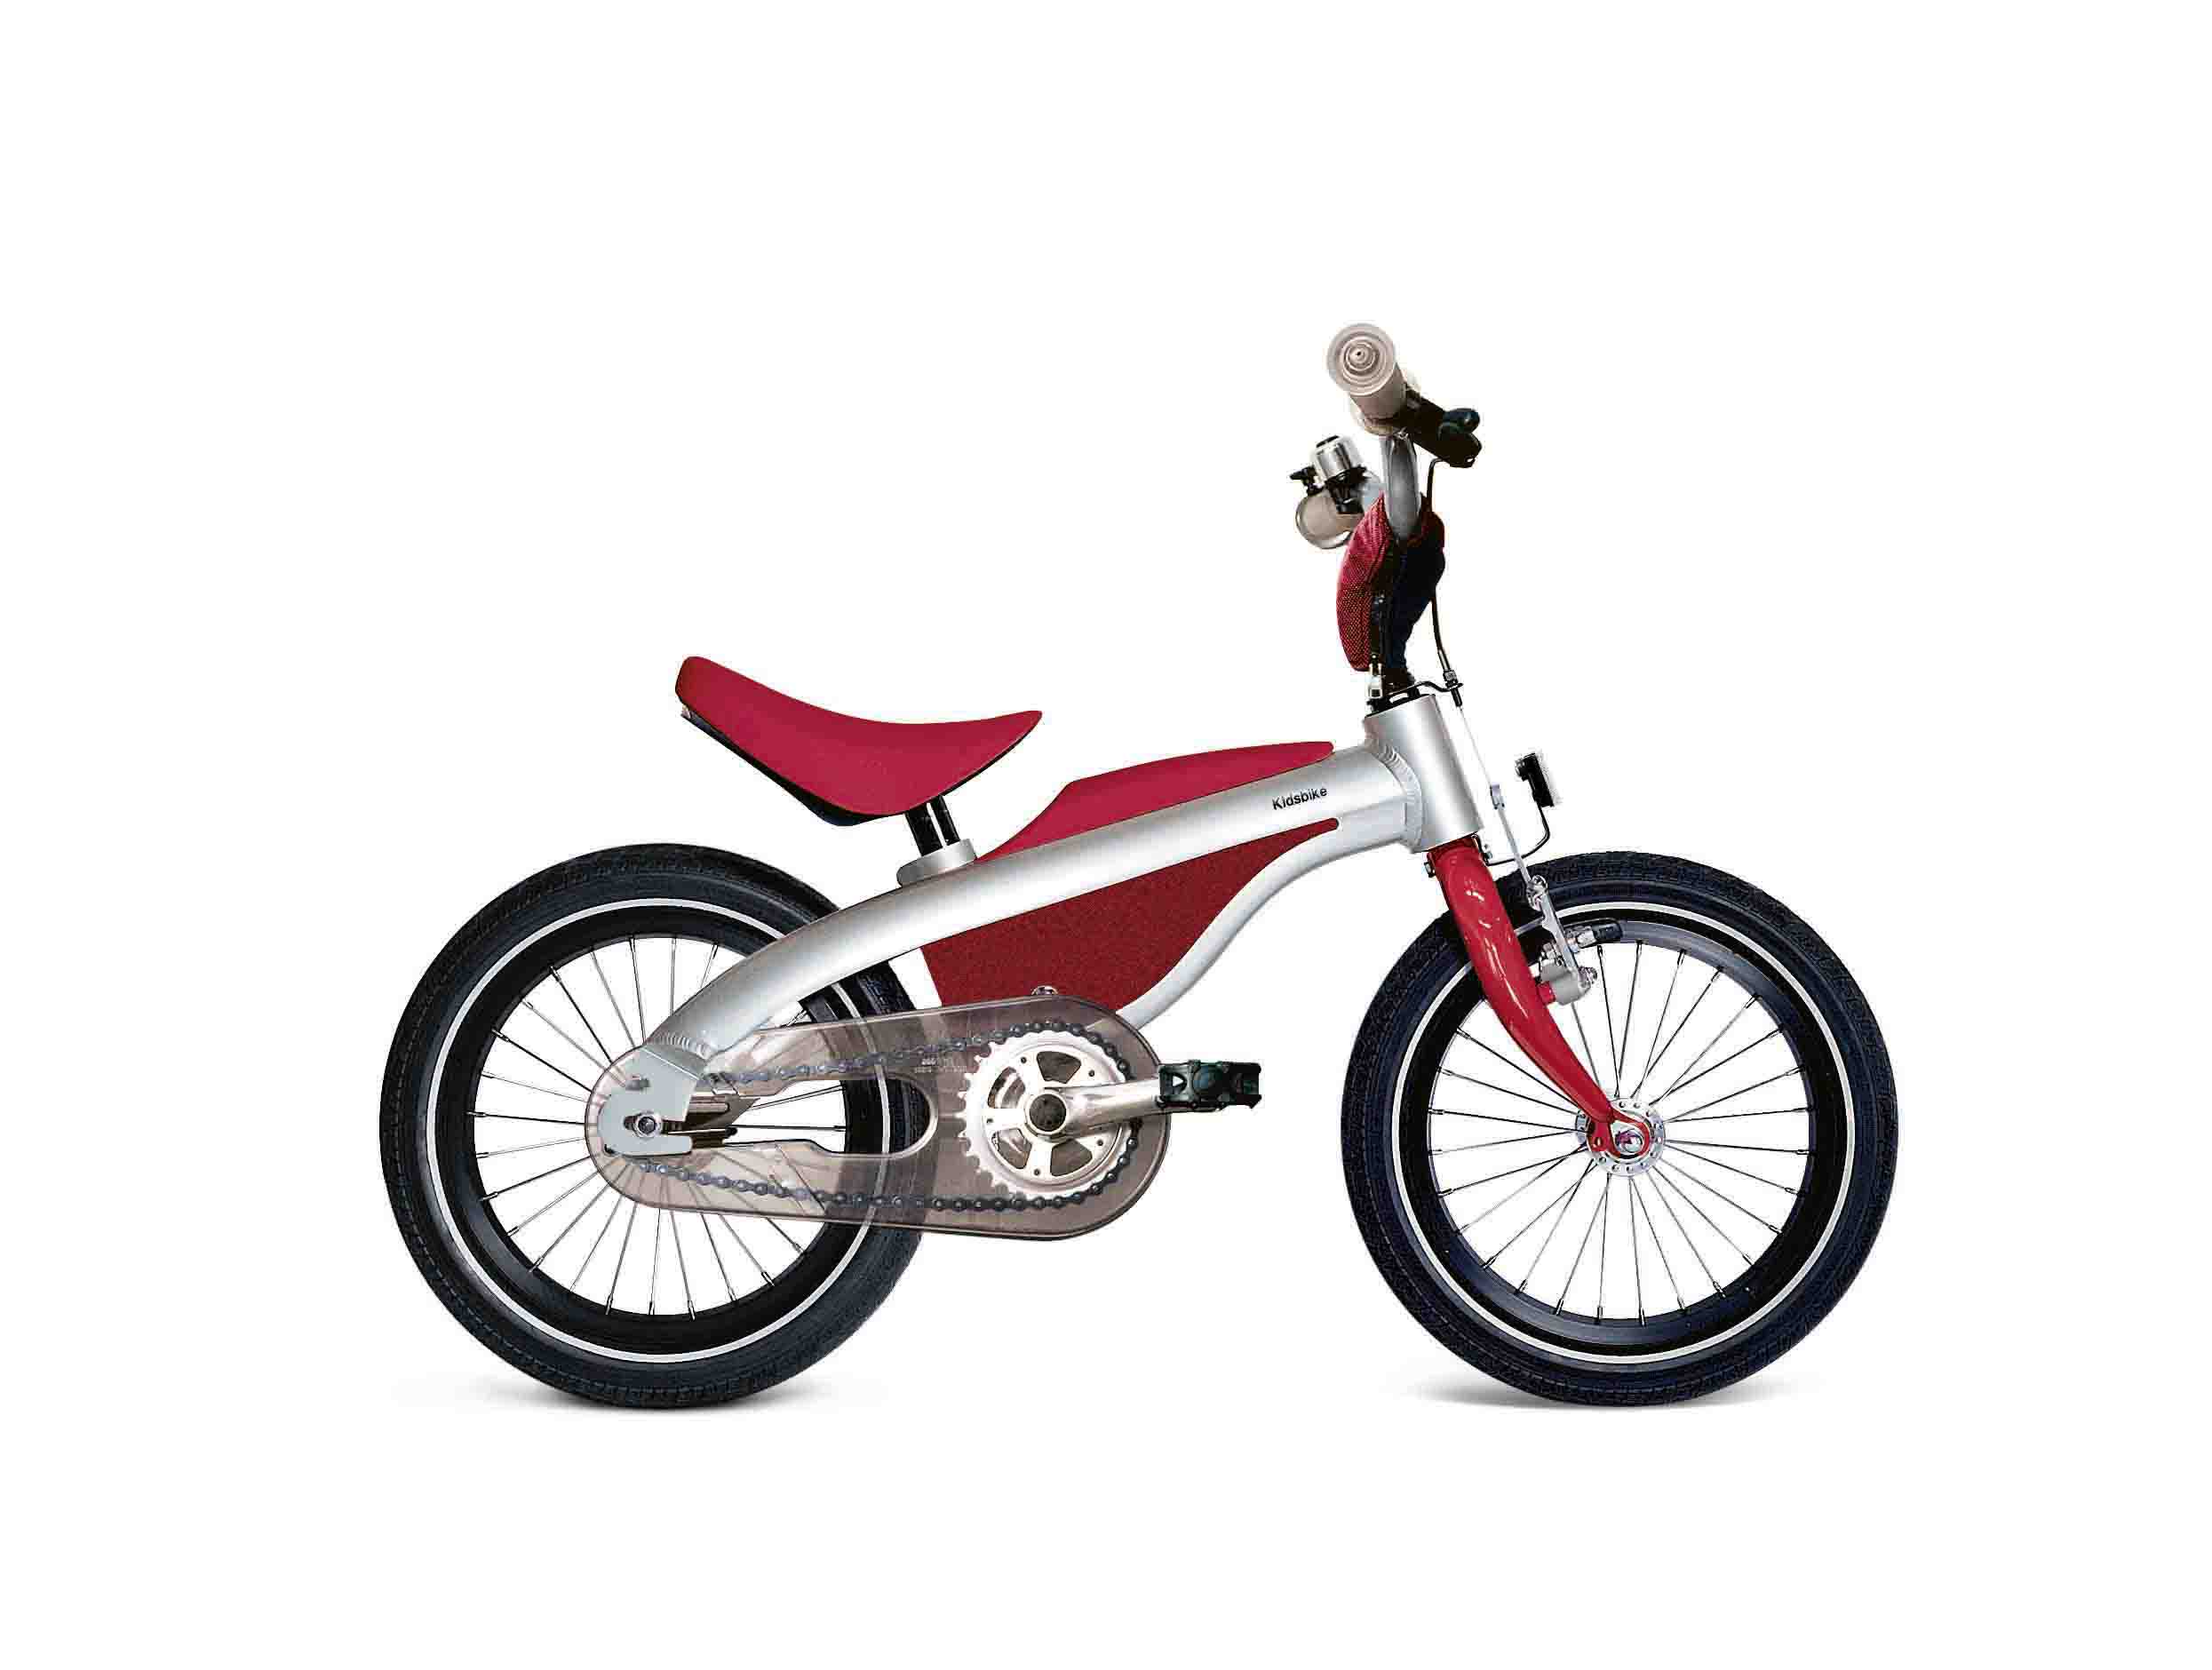 Bmw bike for kid #5